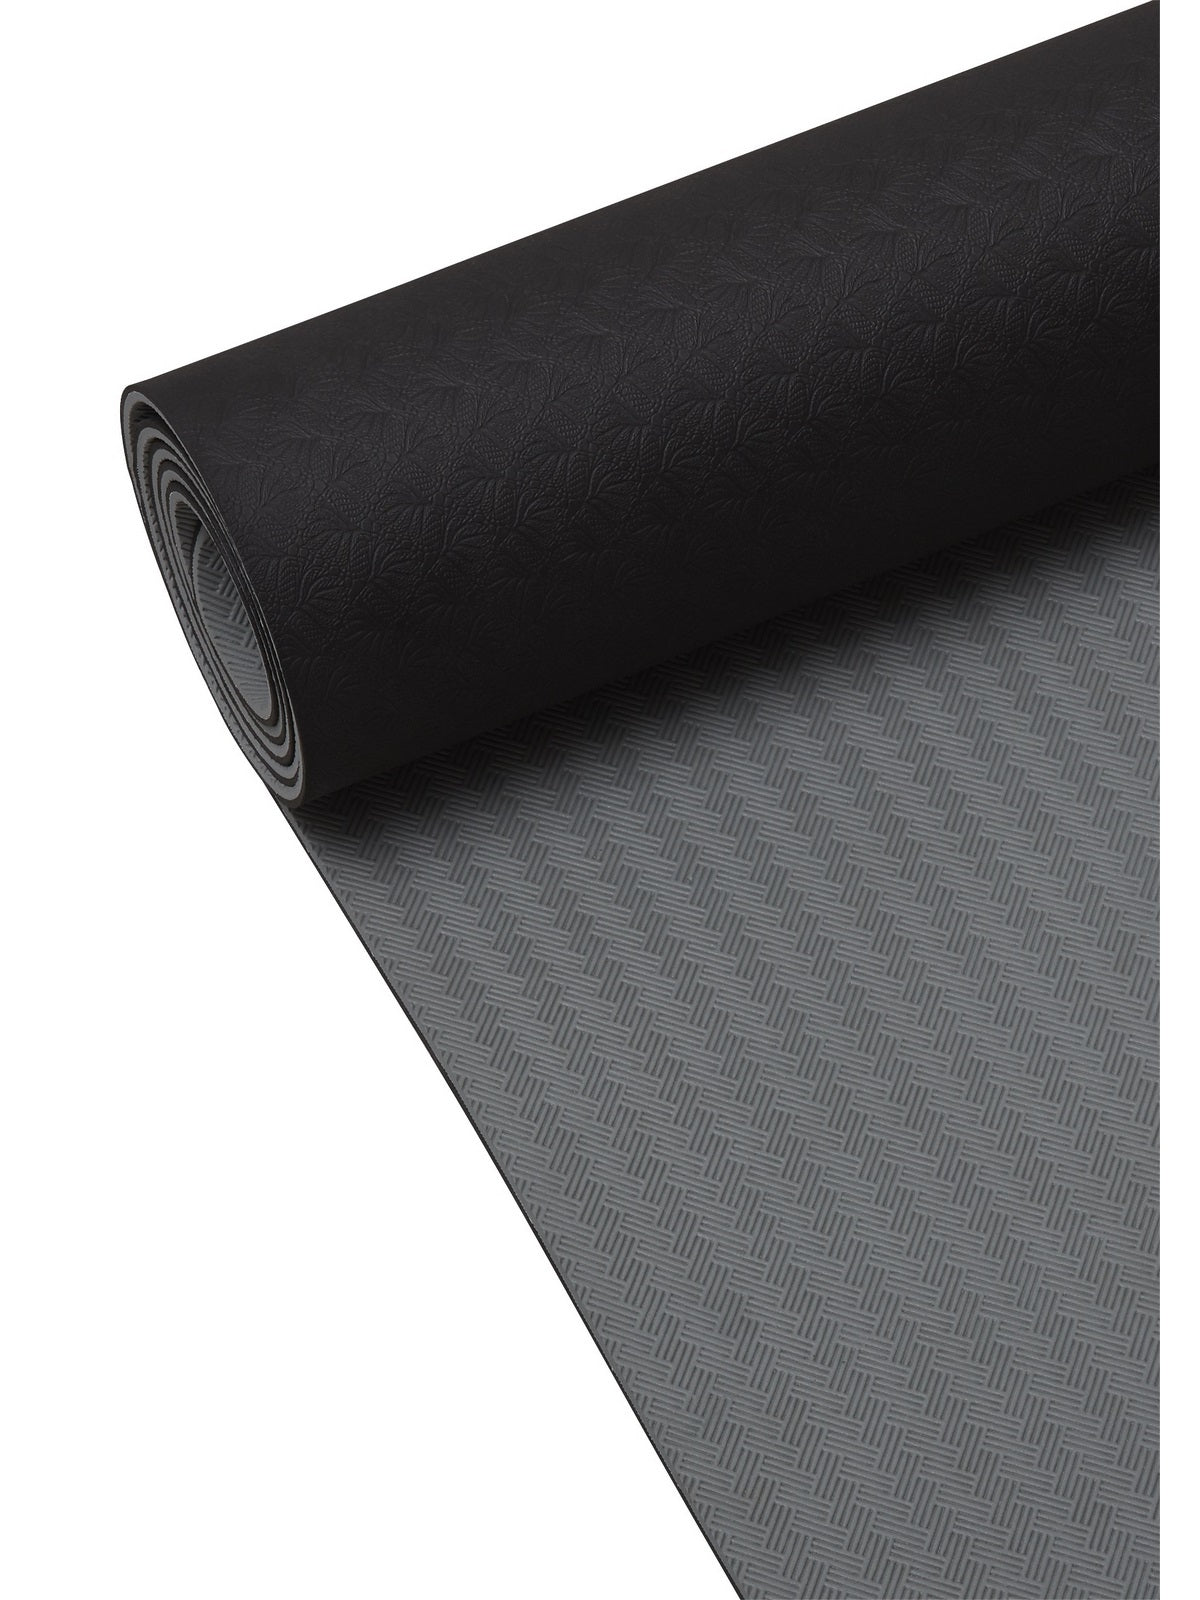 Mata do jogi CASALL Yoga mat position 4mm czarno szary